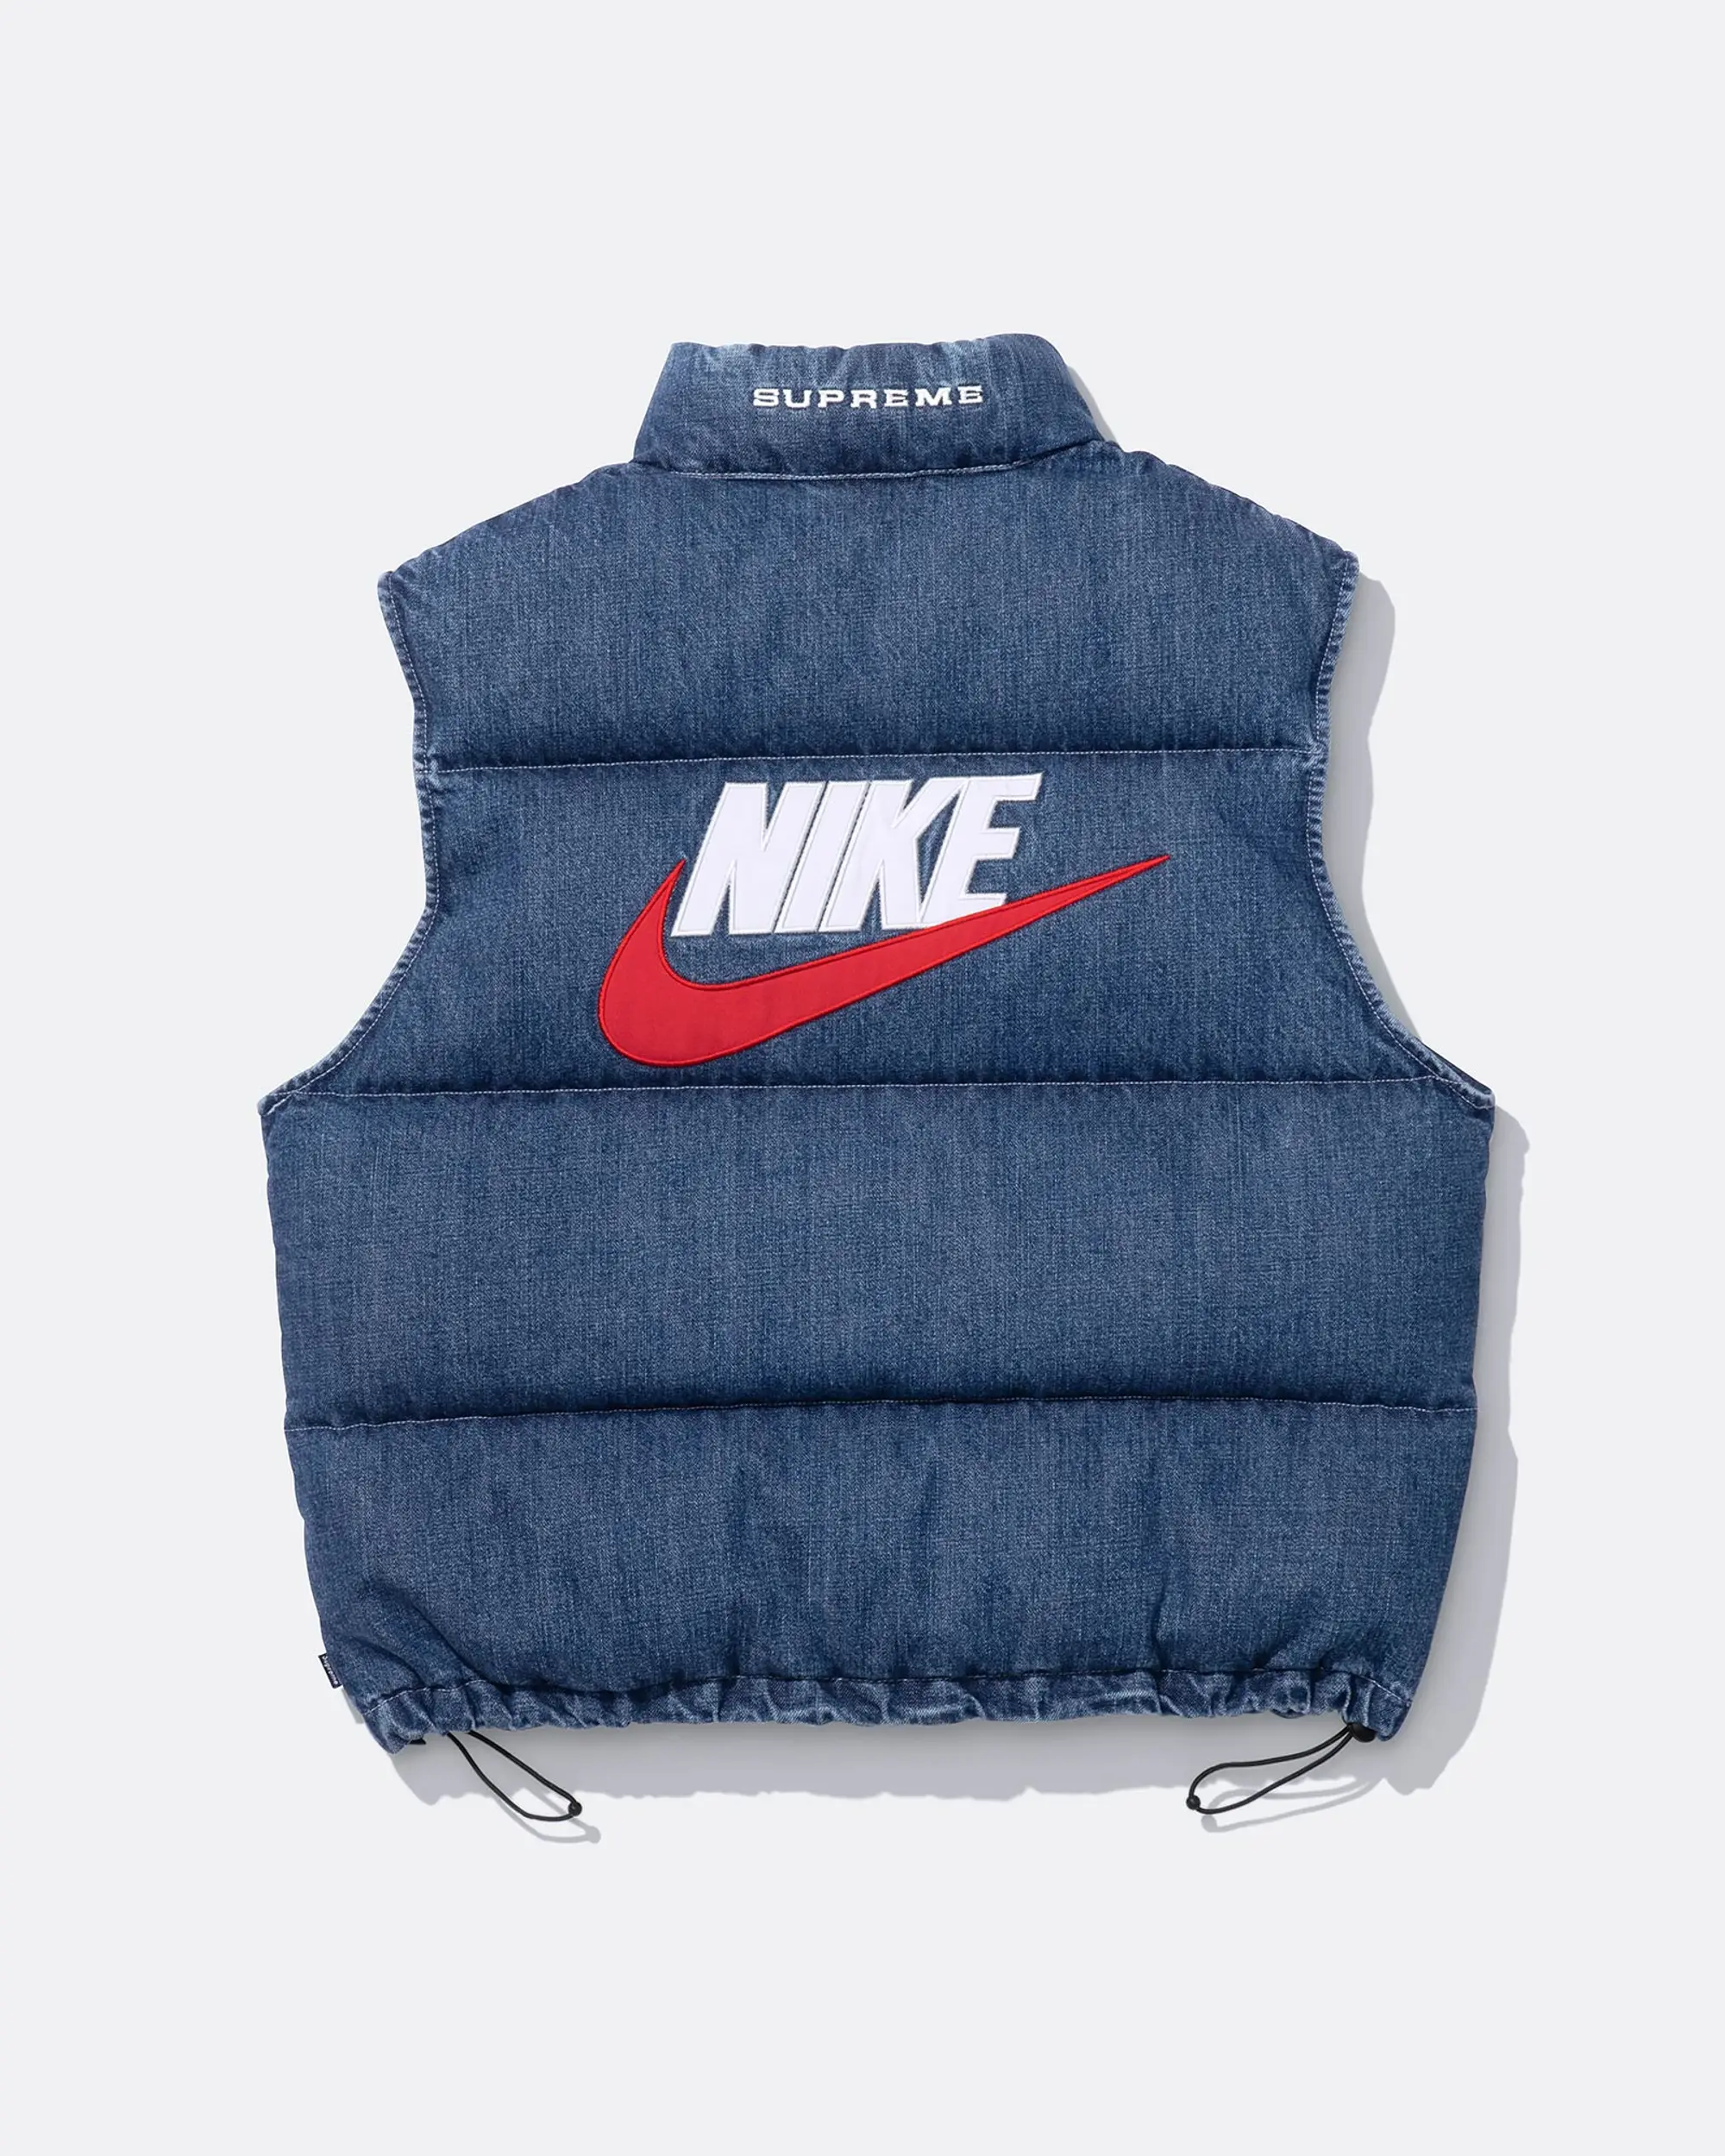 sizeLSupreme x Nike Denim Puffer Vest Natural